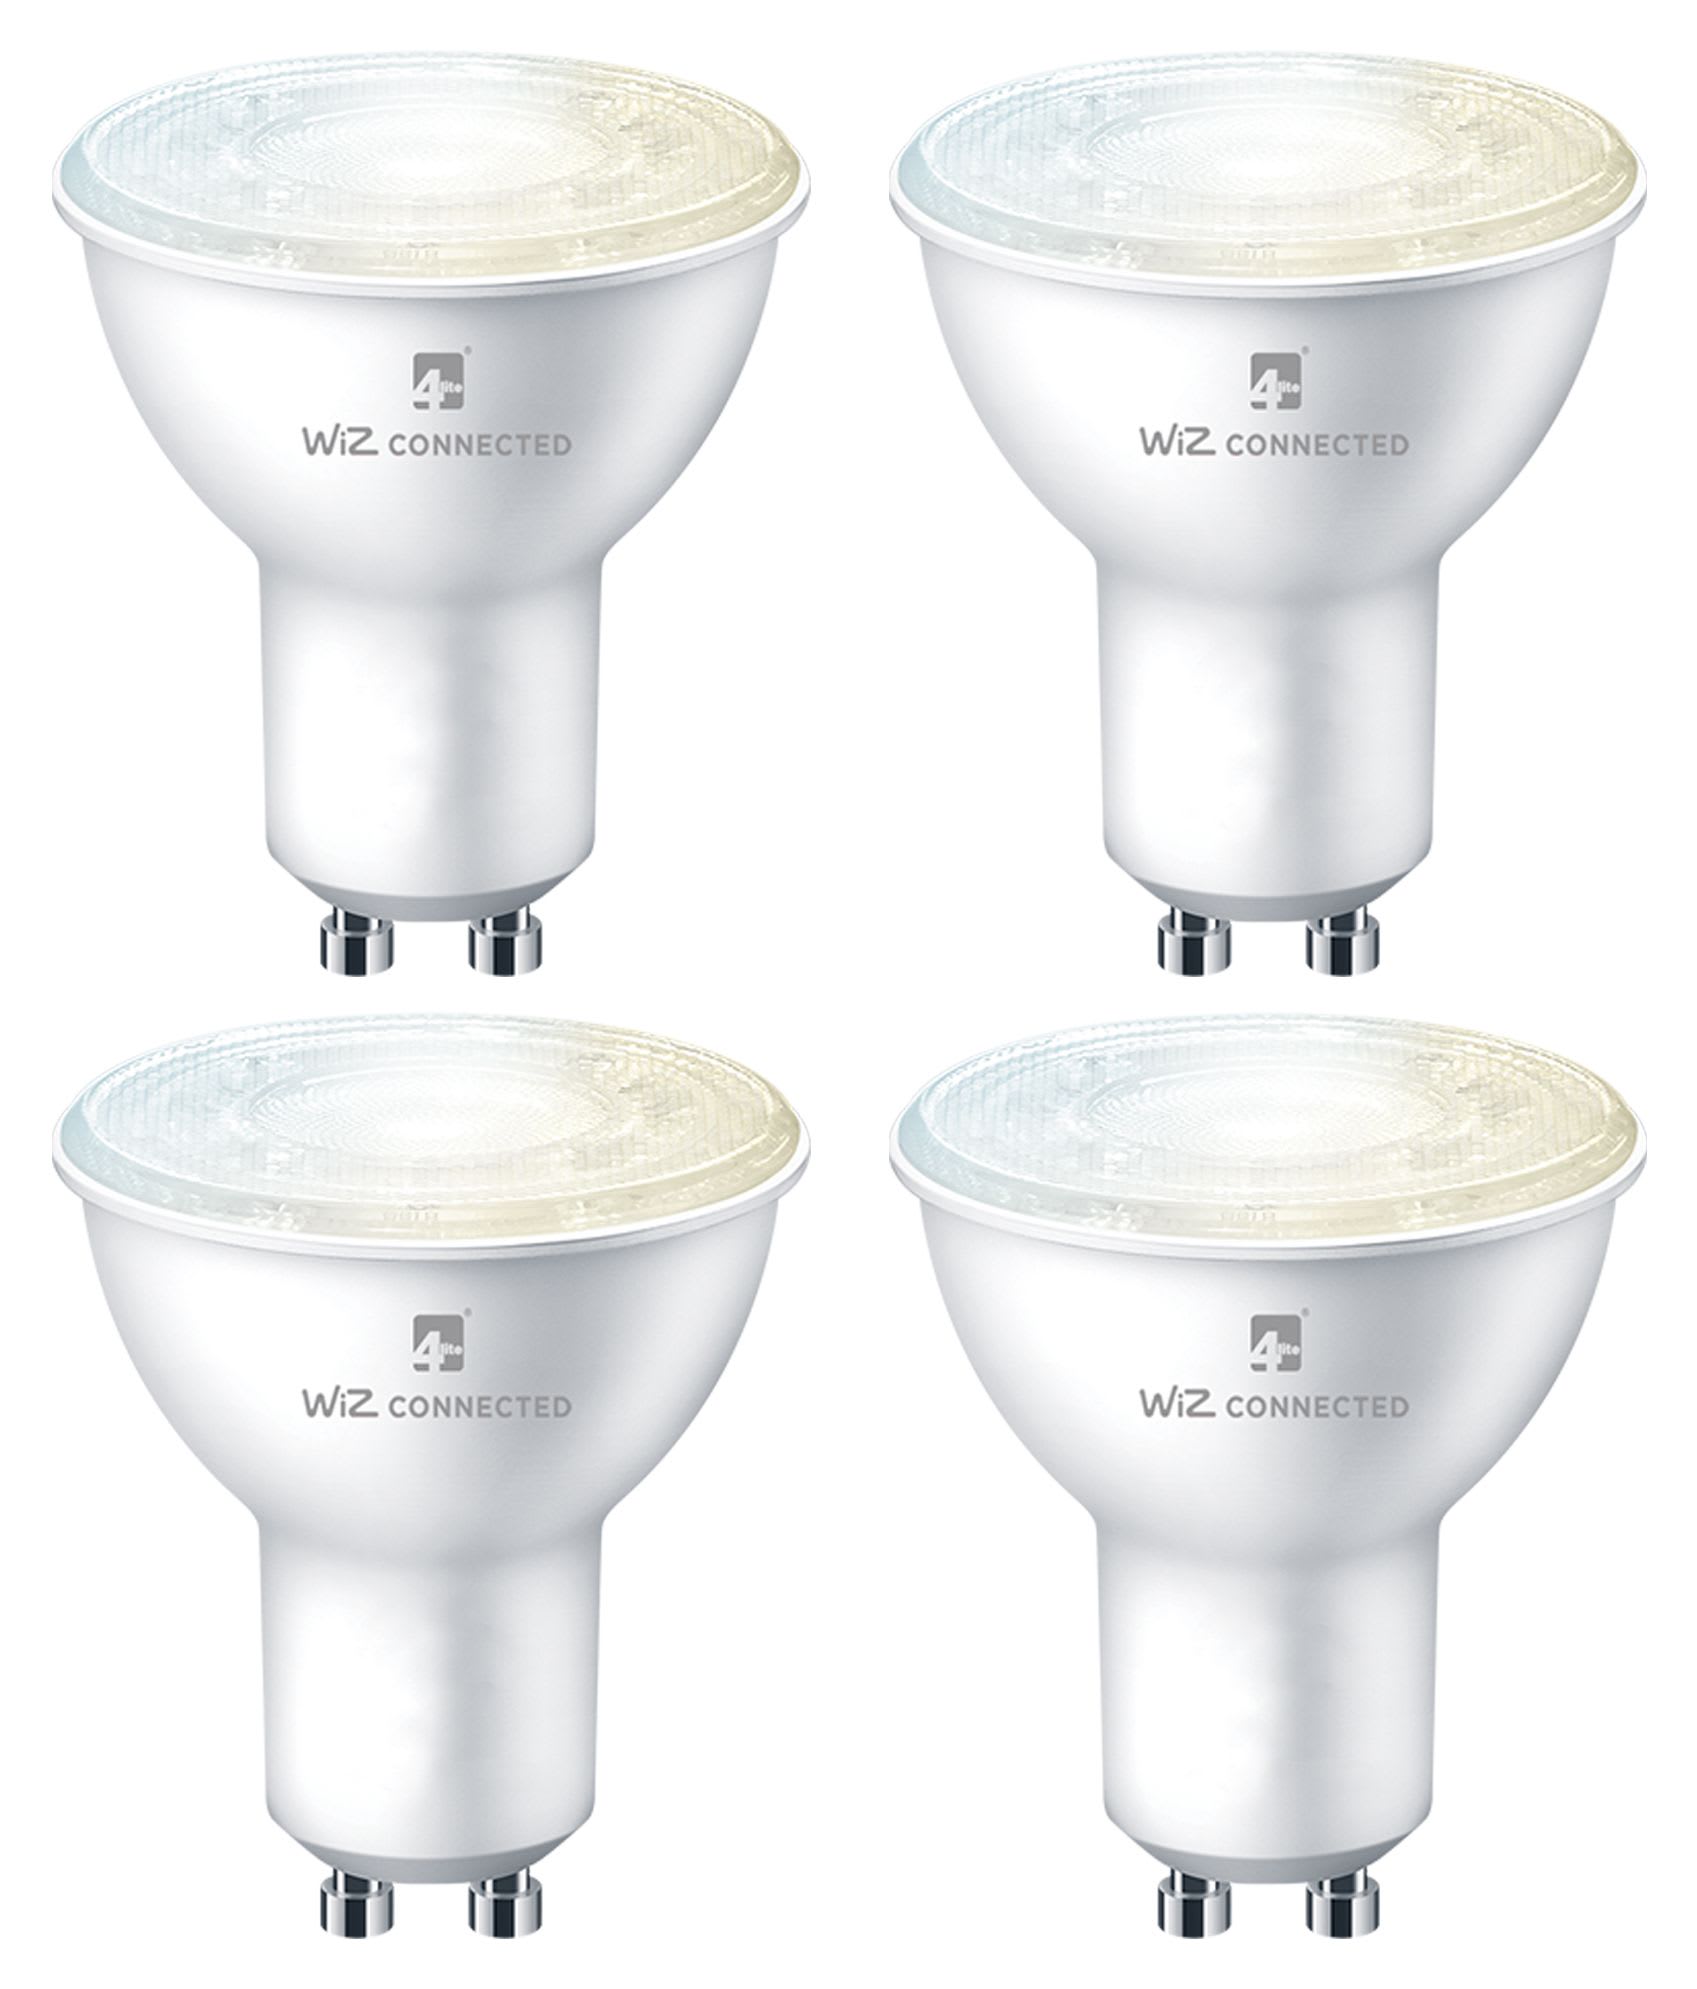 4lite WiZ Connected LED SMART GU10 Light Bulbs